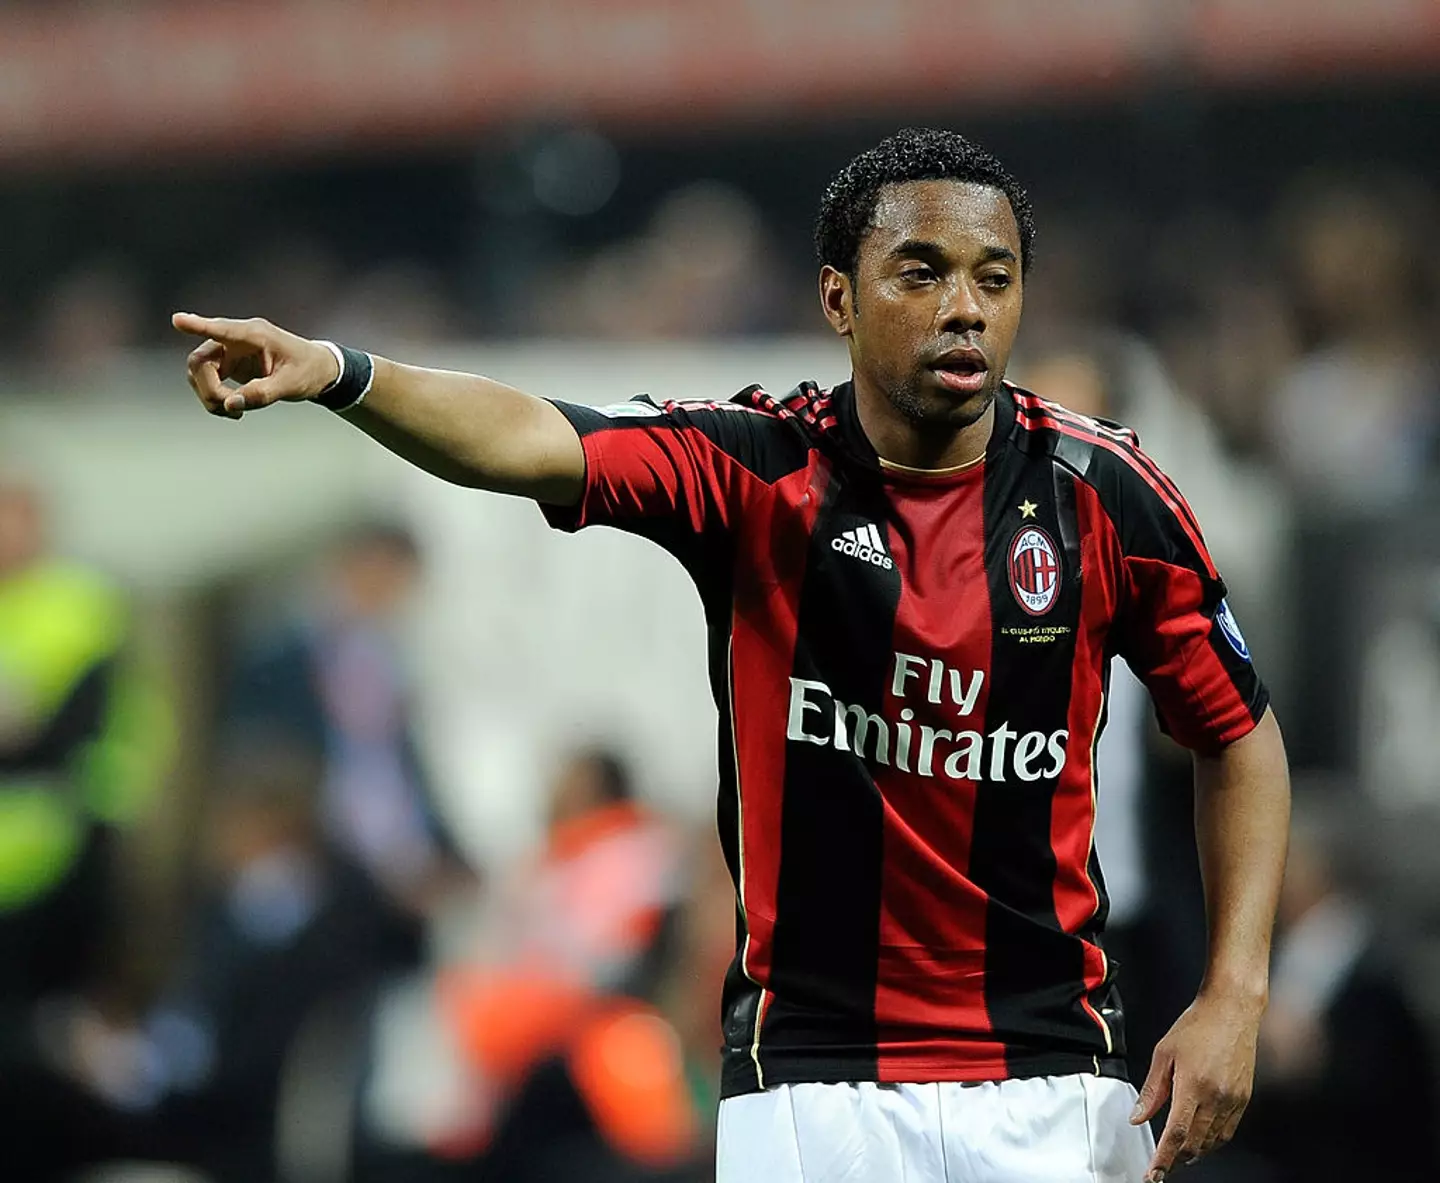 Robinho playing for AC Milan (